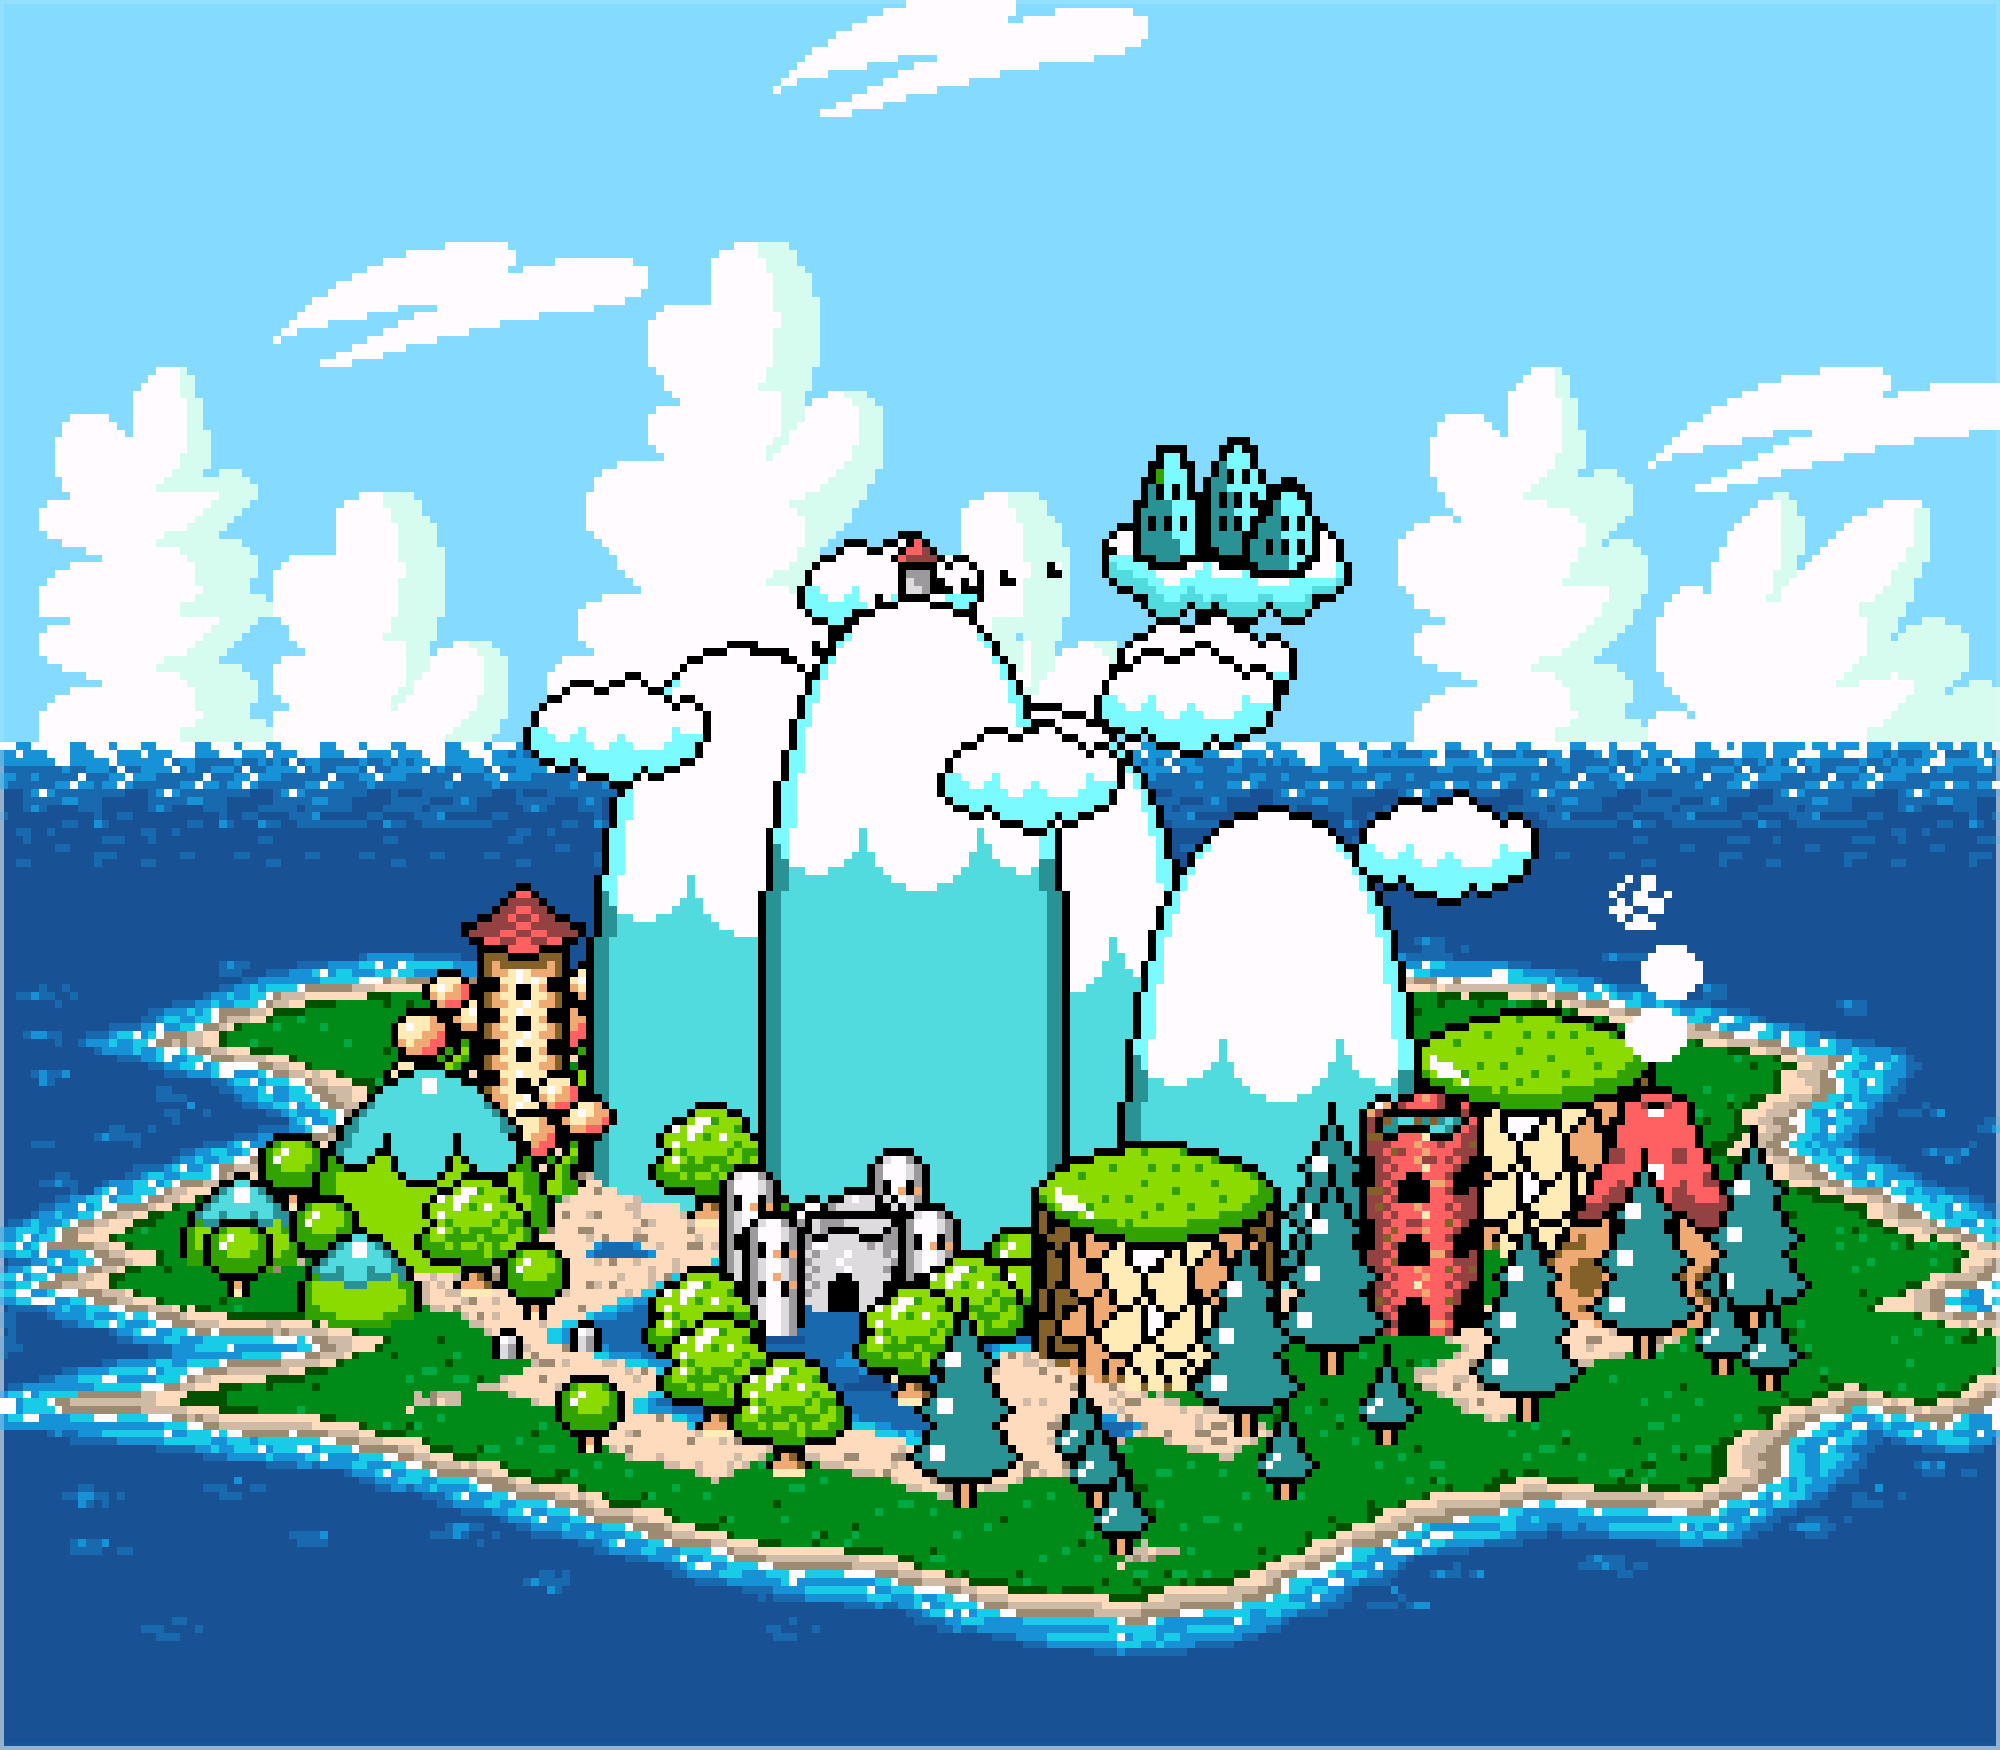 Super mario world yoshi's island. Марио остров Йоши. Super Mario World 2. Yoshi super Mario World 2. Super Mario World 2 Yoshis Island.